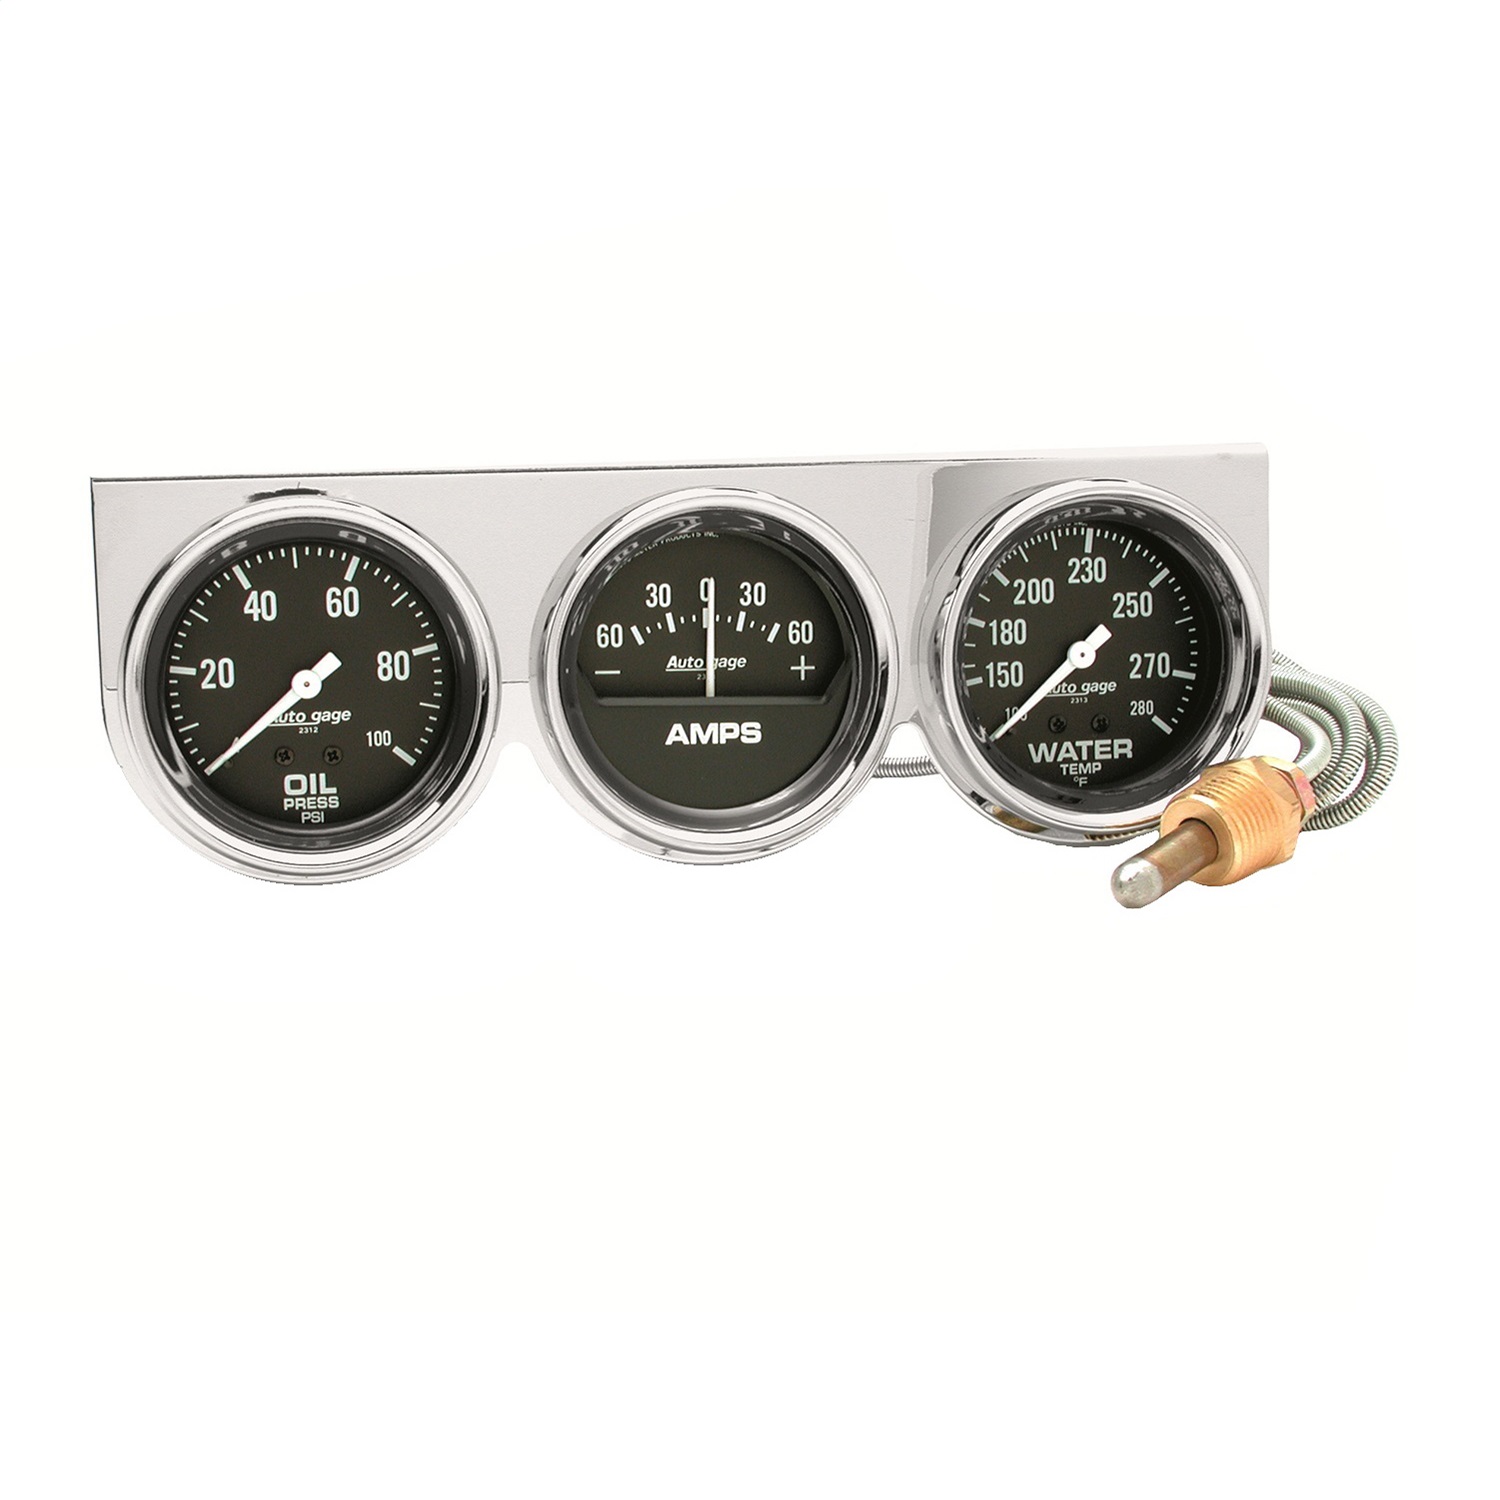 Auto Meter Auto Meter 2395 Autogage; Black Oil/Amp/Water; Chrome Console